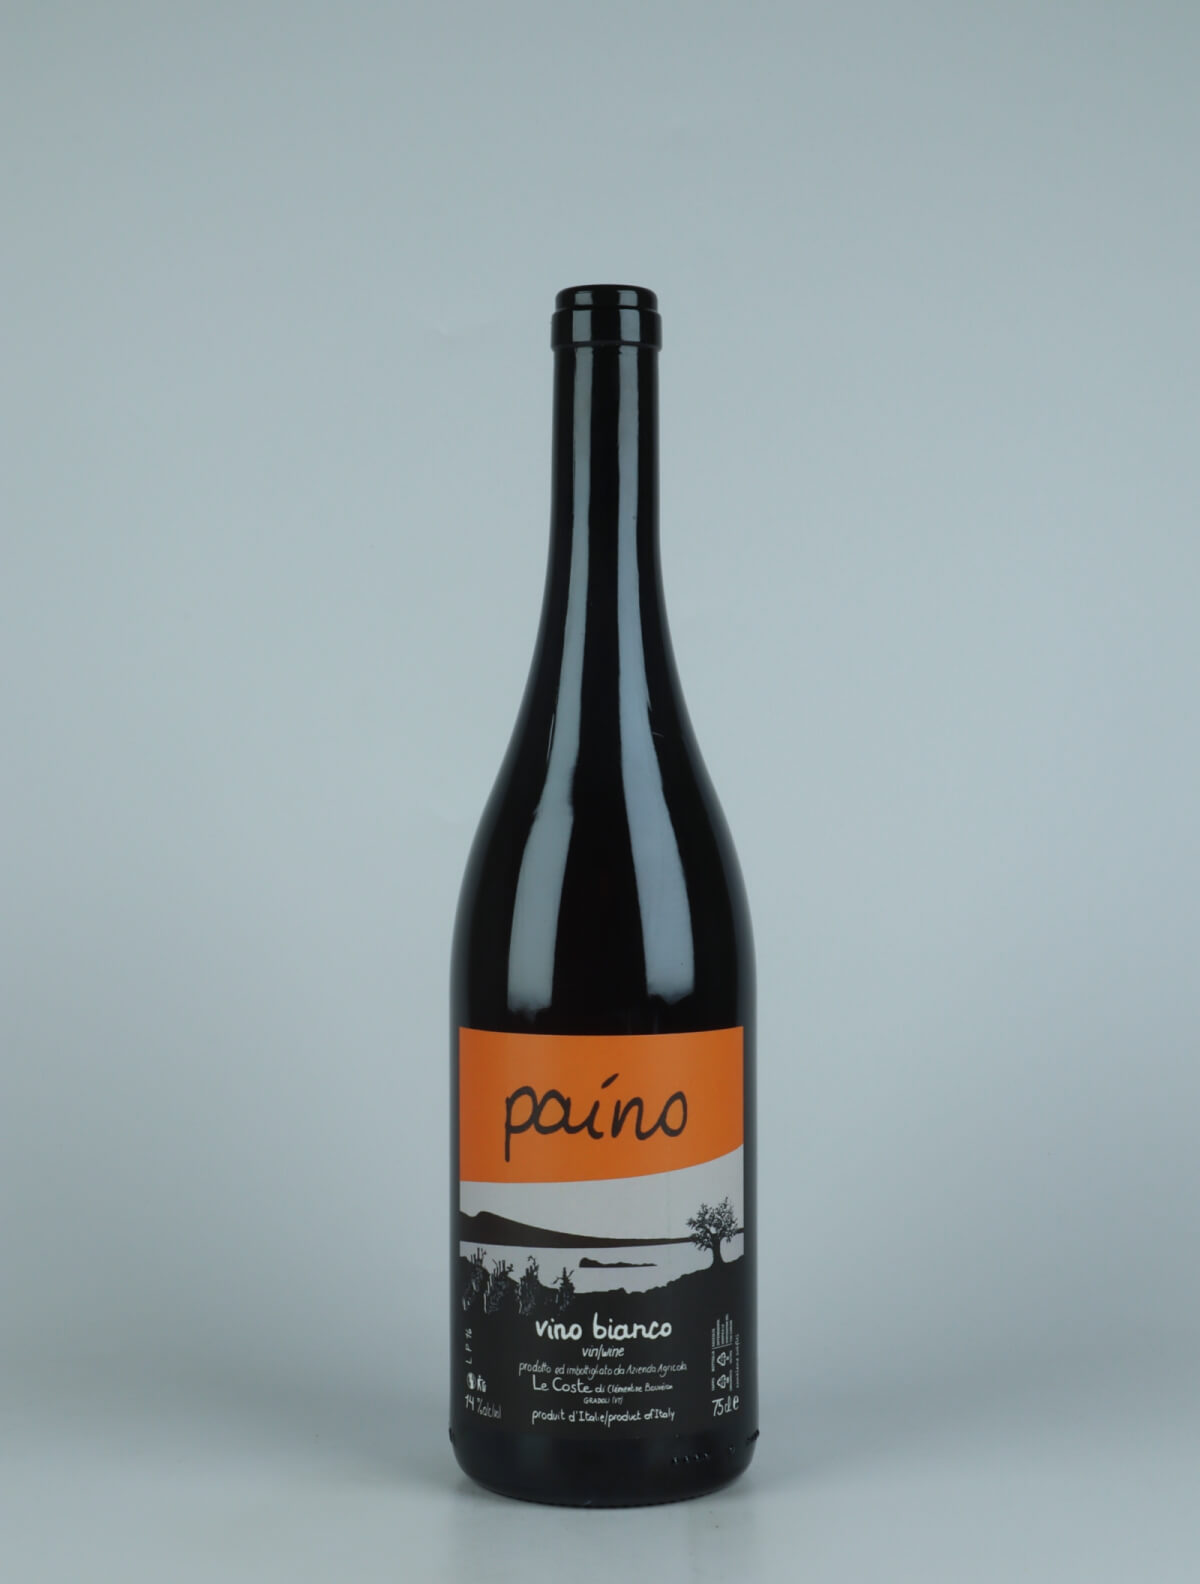 A bottle 2016 Paino Bianco Orange wine from Le Coste, Lazio in Italy